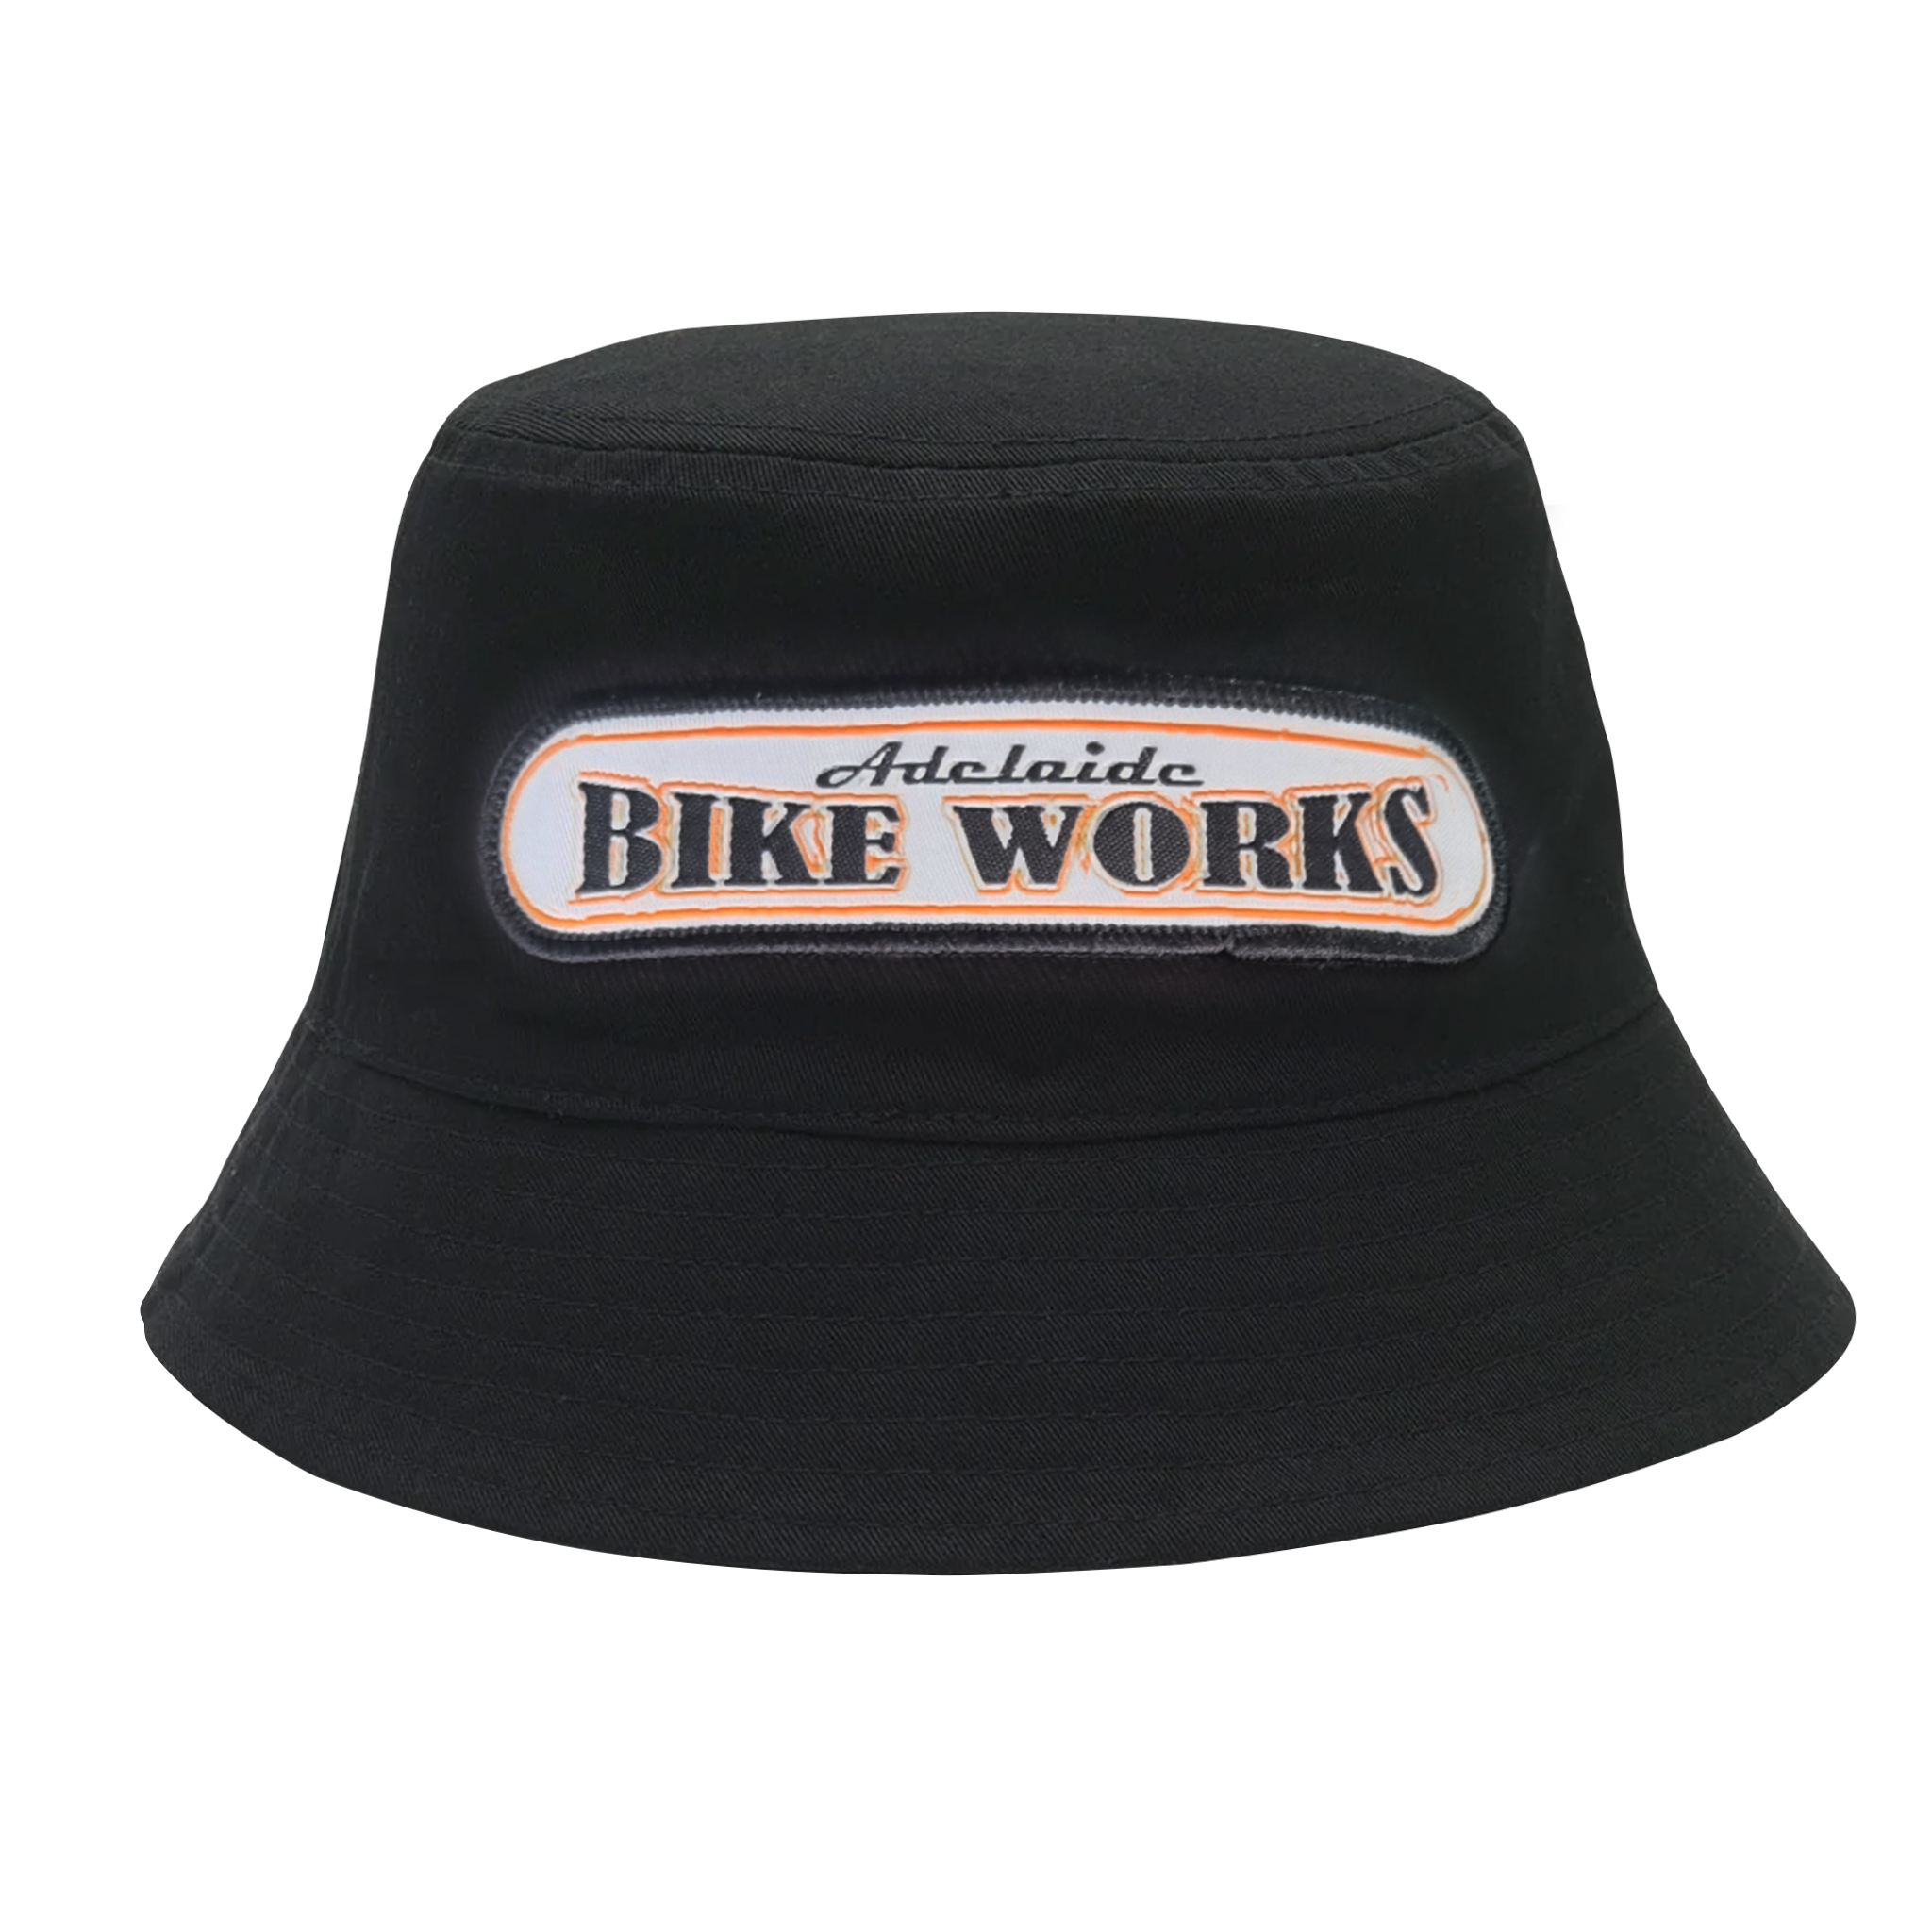 Adelaide Bike Works Bucket Hat